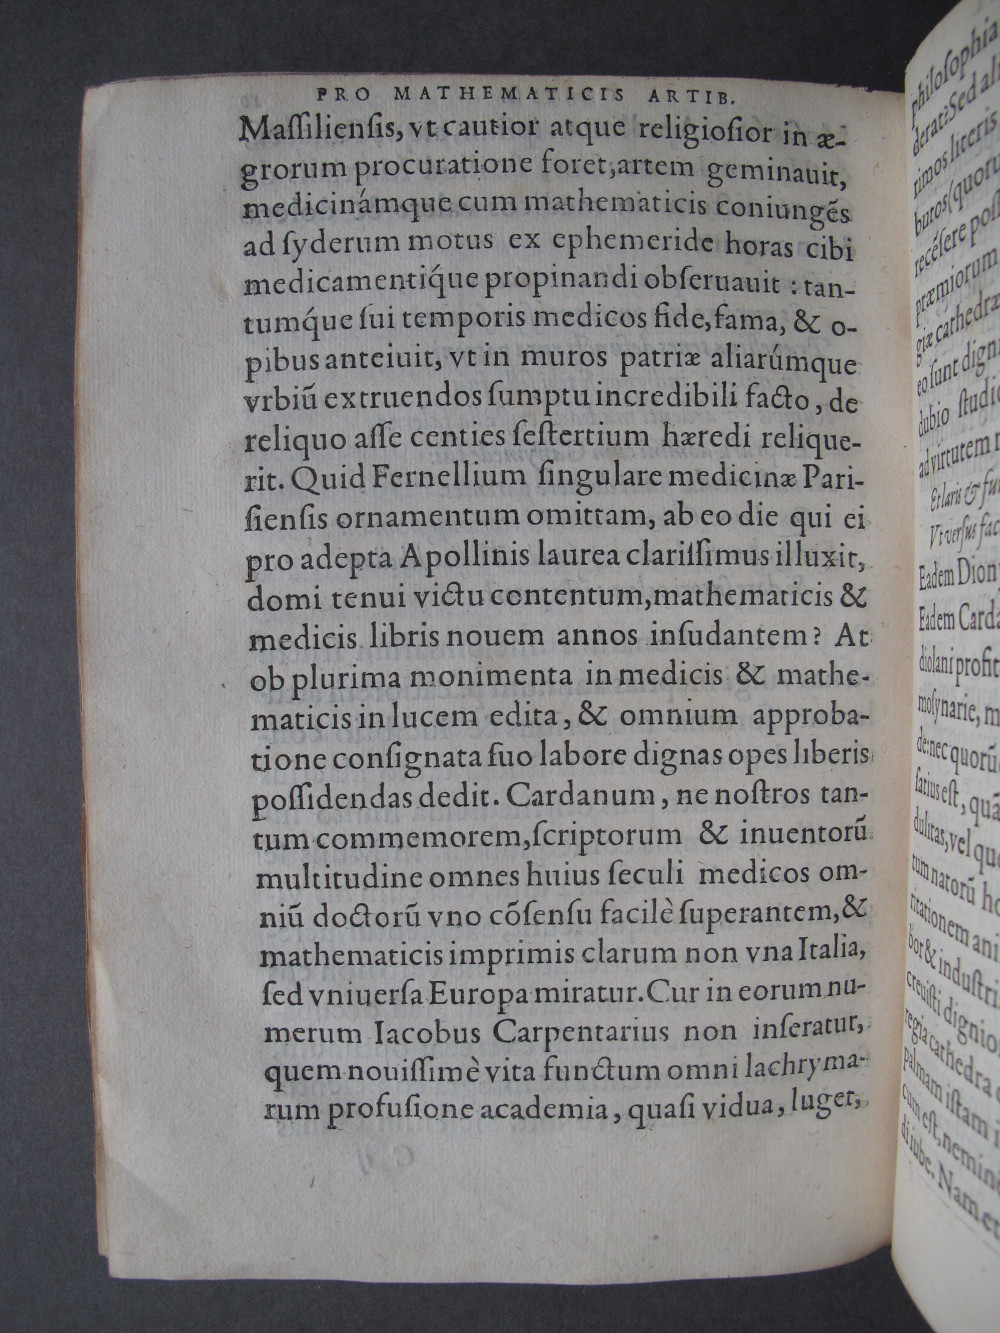 Folio 10 verso